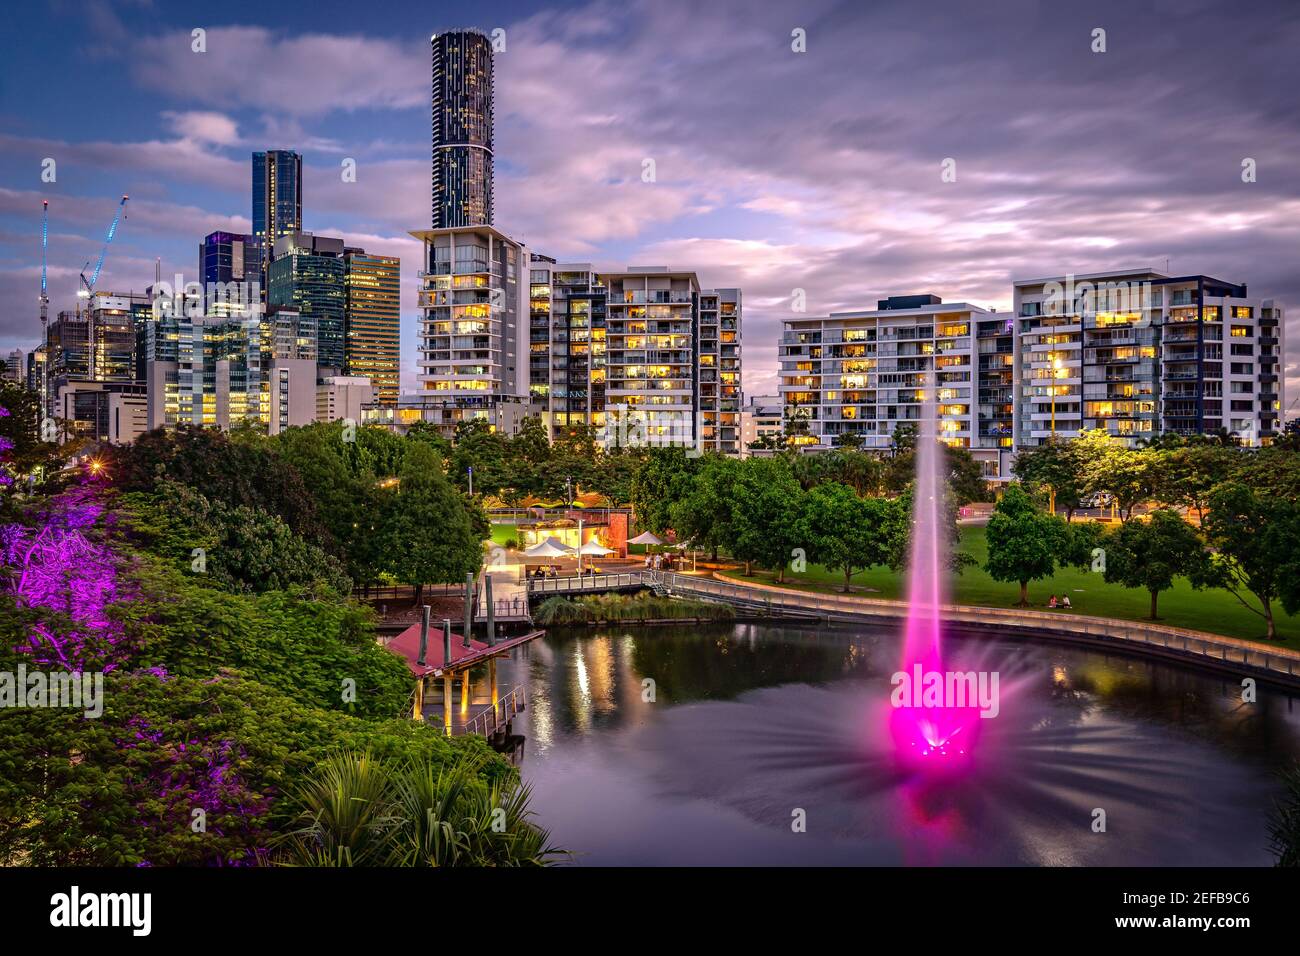 Residential apartment buildings around the Roma Street Parkland with illuminated fountain, Brisbane, Australia Stock Photo